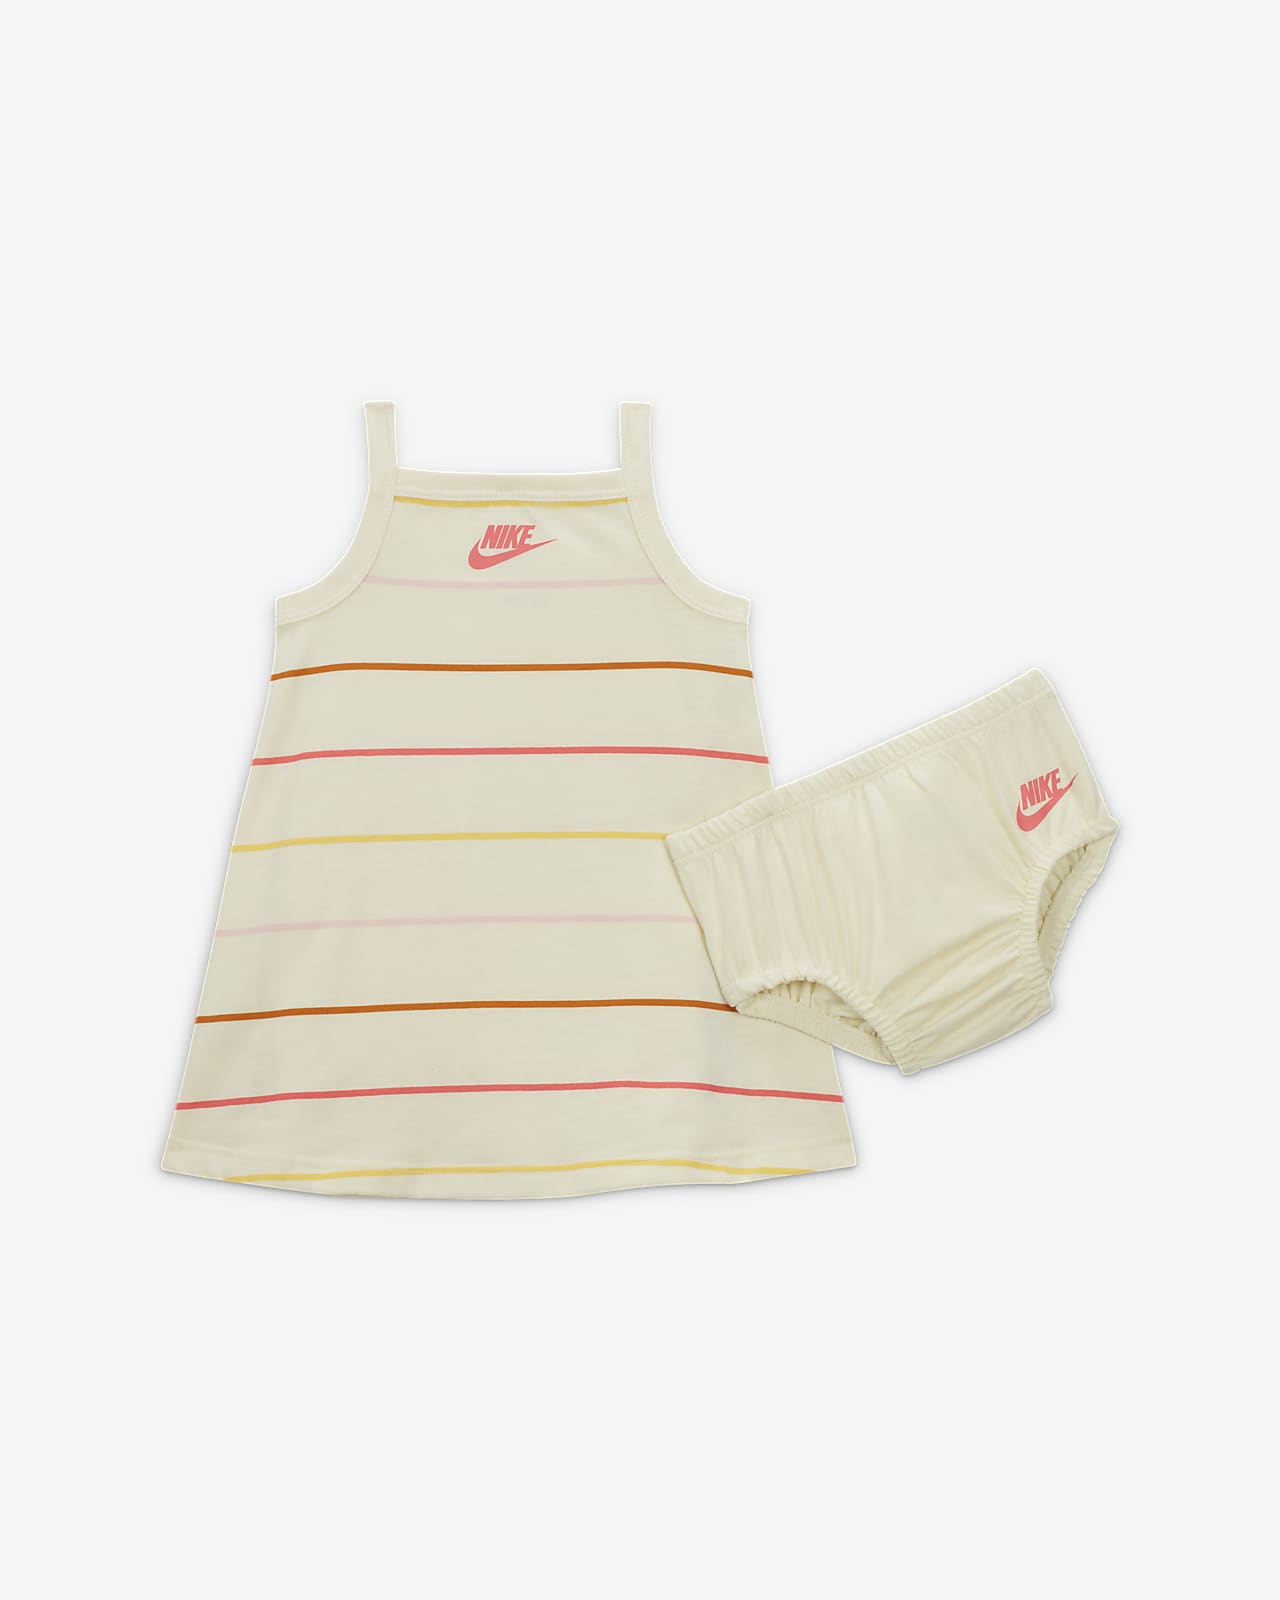 Vestido Nike "Let's Roll" Dress para bebé